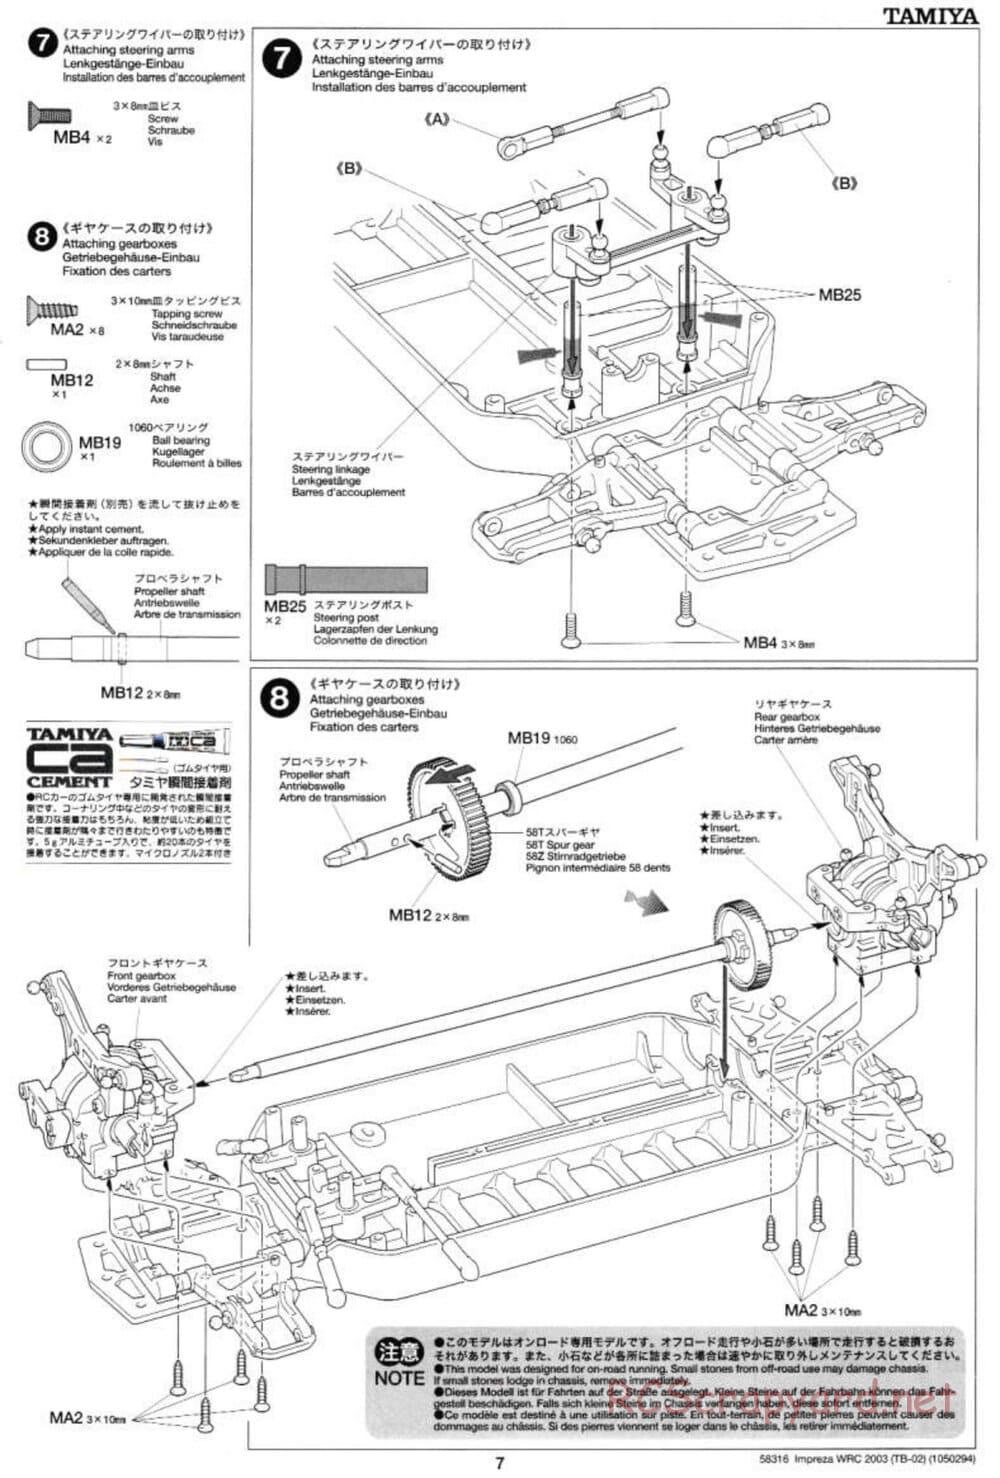 Tamiya - Subaru Impreza WRC 2003 - TB-02 Chassis - Manual - Page 7